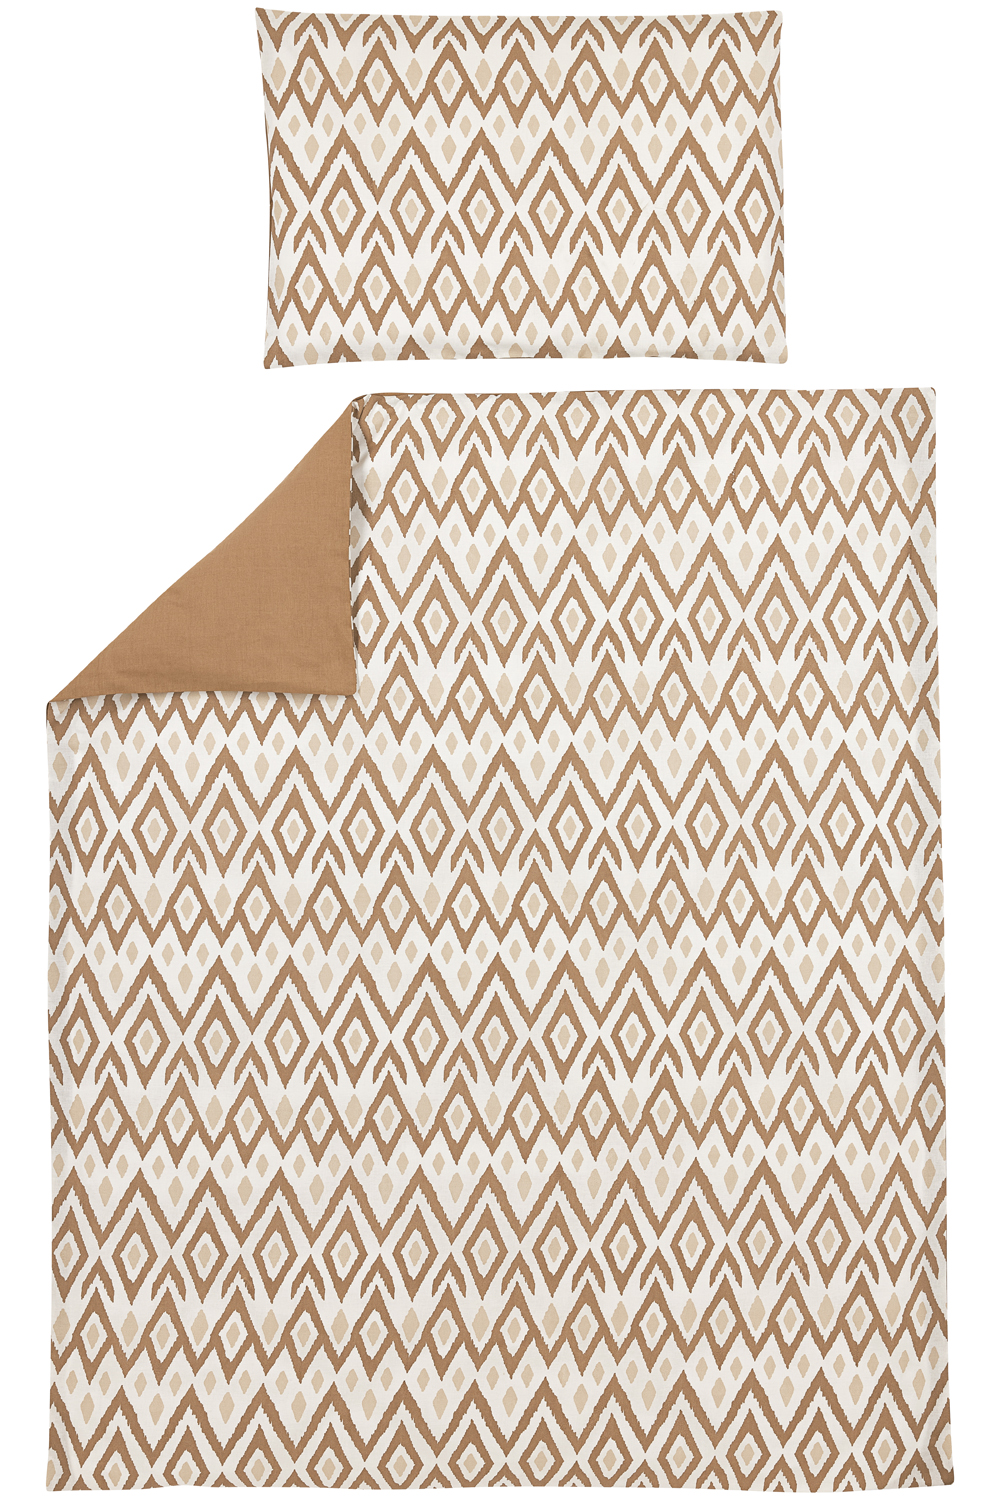 Duvet Cover + Pillowcase Ikat/Uni - Sand/Toffee - 120x150cm